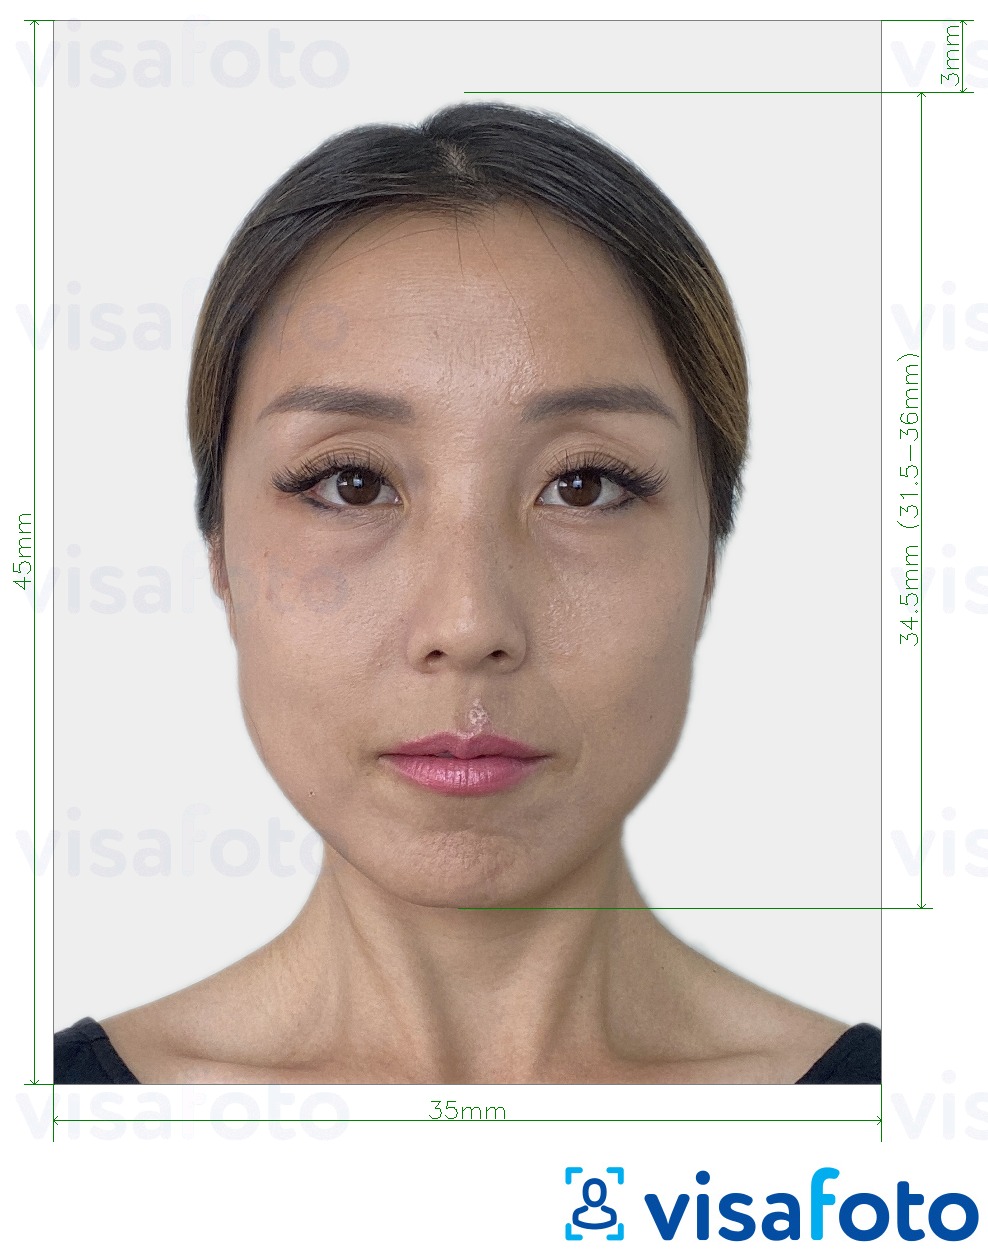 Contoh foto untuk Pasport Korea Selatan 35x45 mm (3.5x4.5 cm) dengan spesifikasi saiz yang tepat.